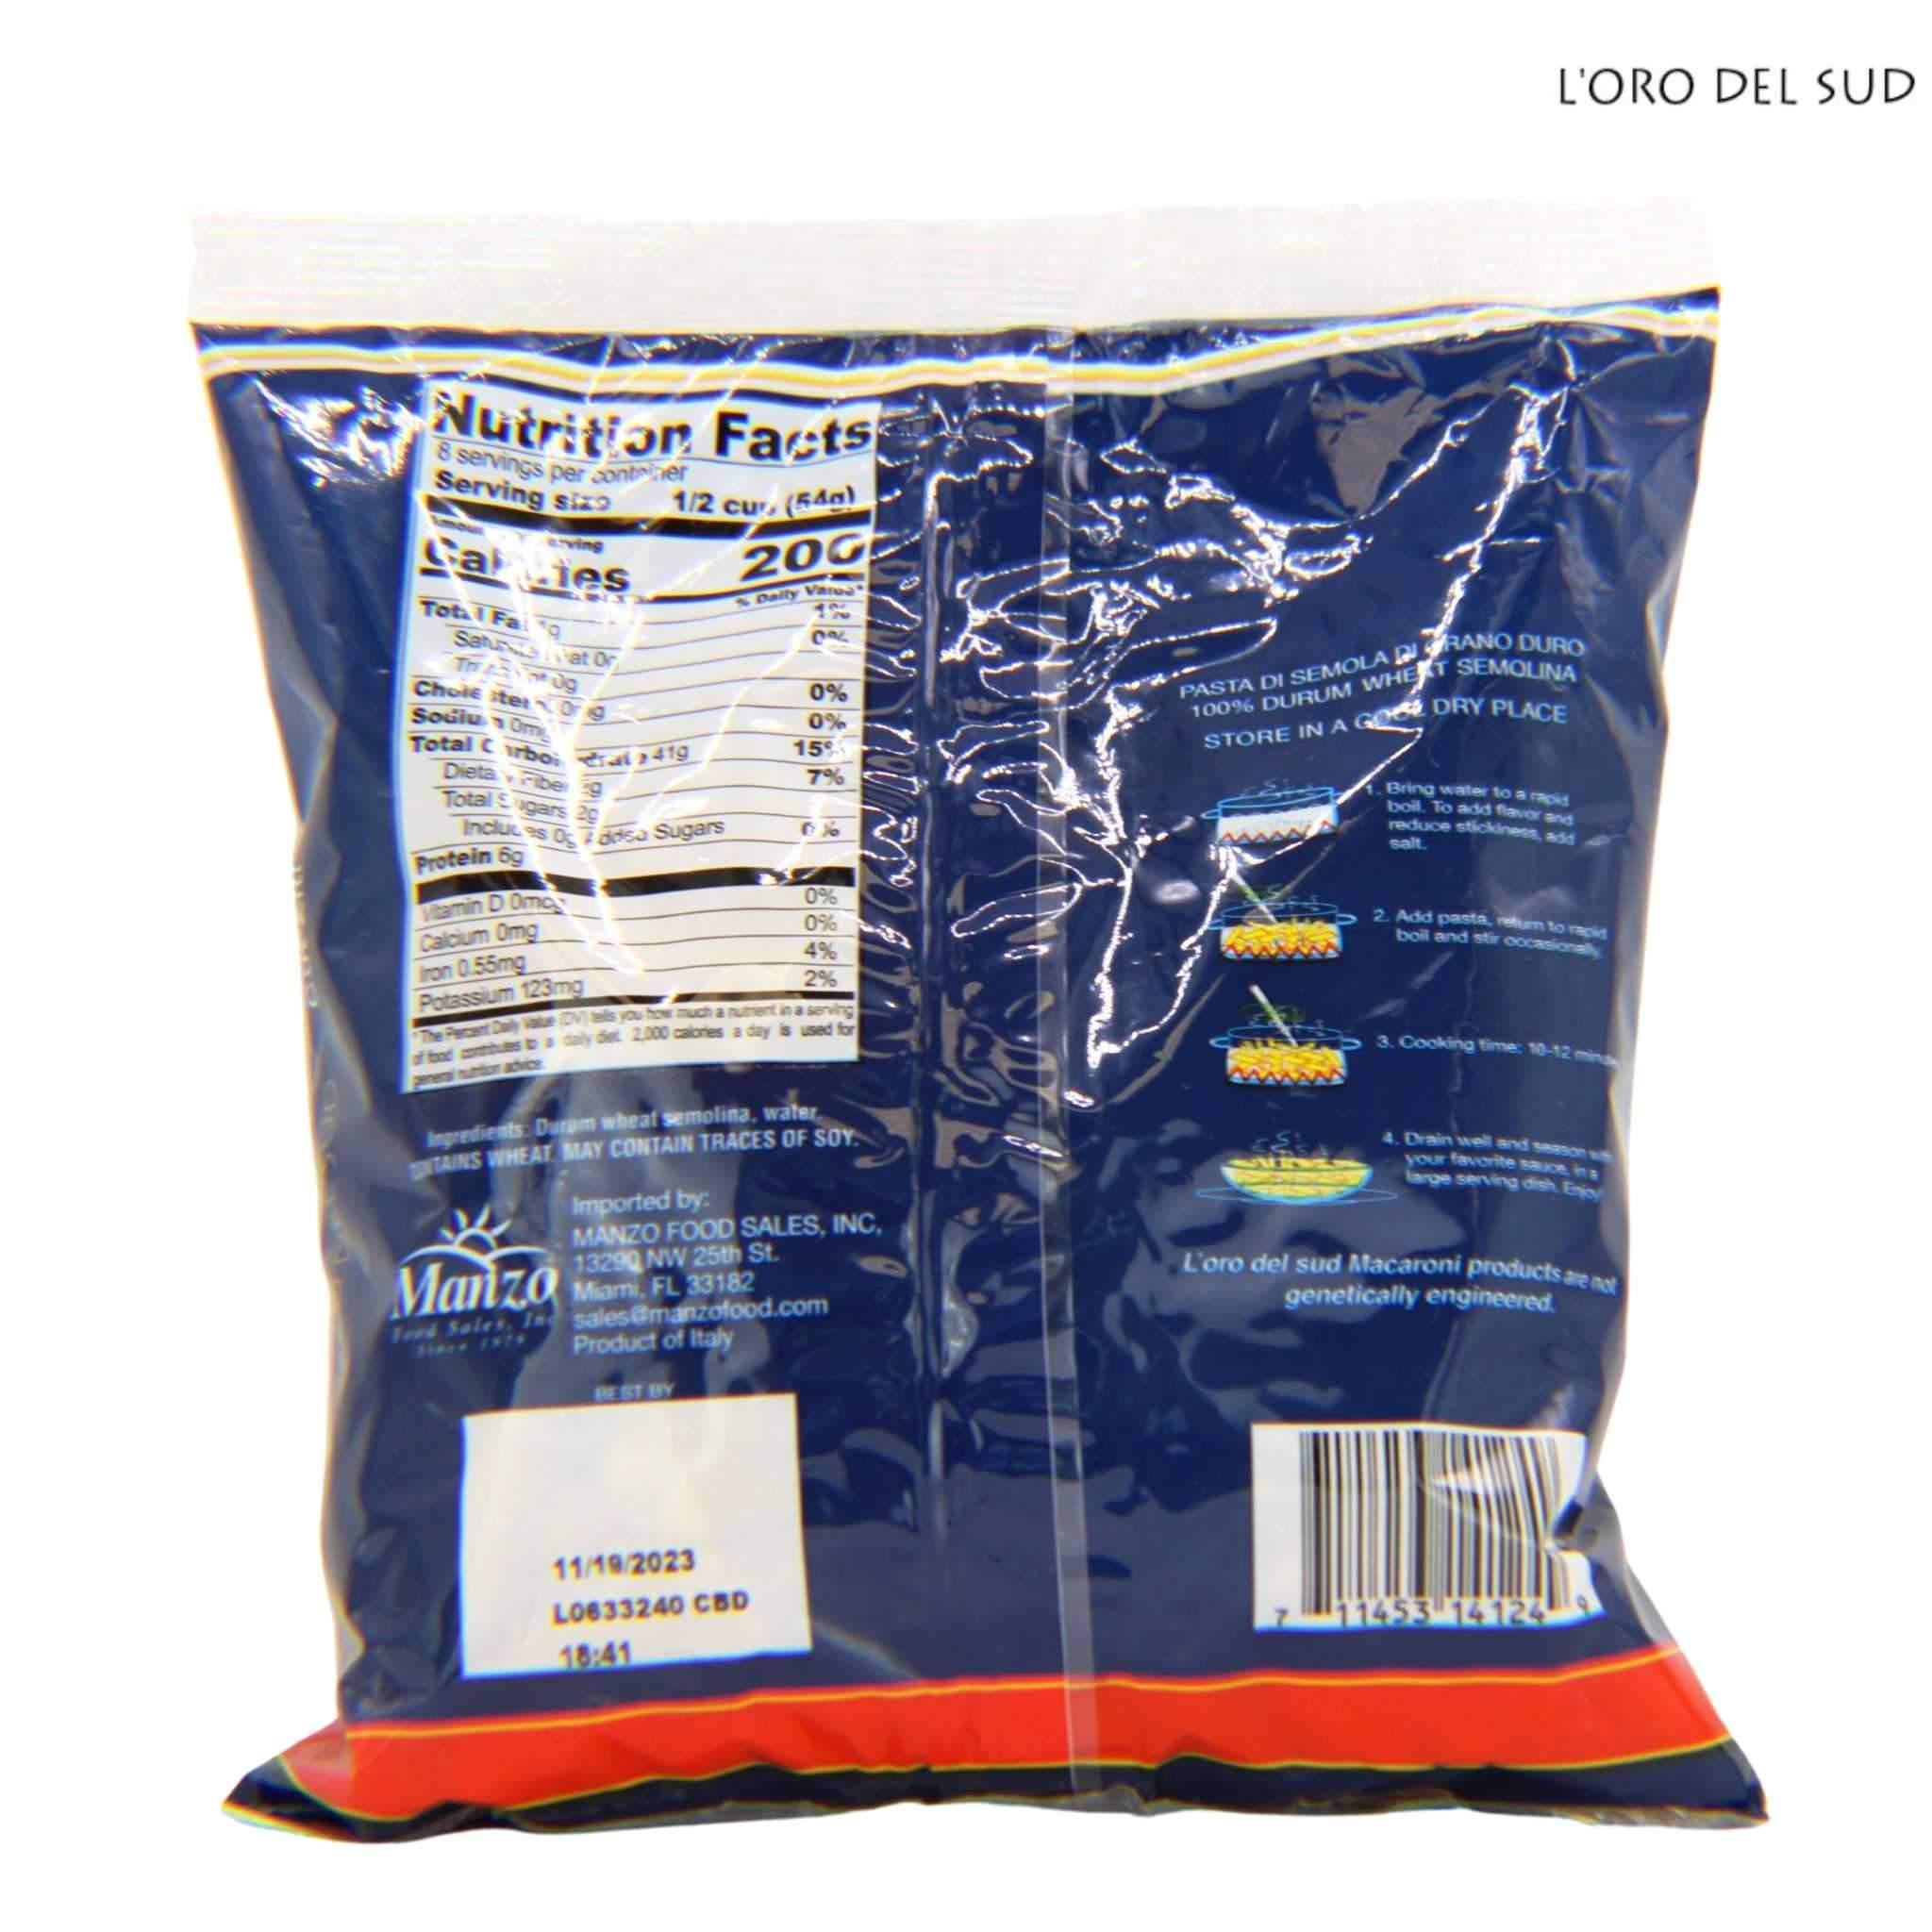 L'Oro Del Sud Cut Ziti Pasta 1 lb. Bag - Wholesale Italian Food